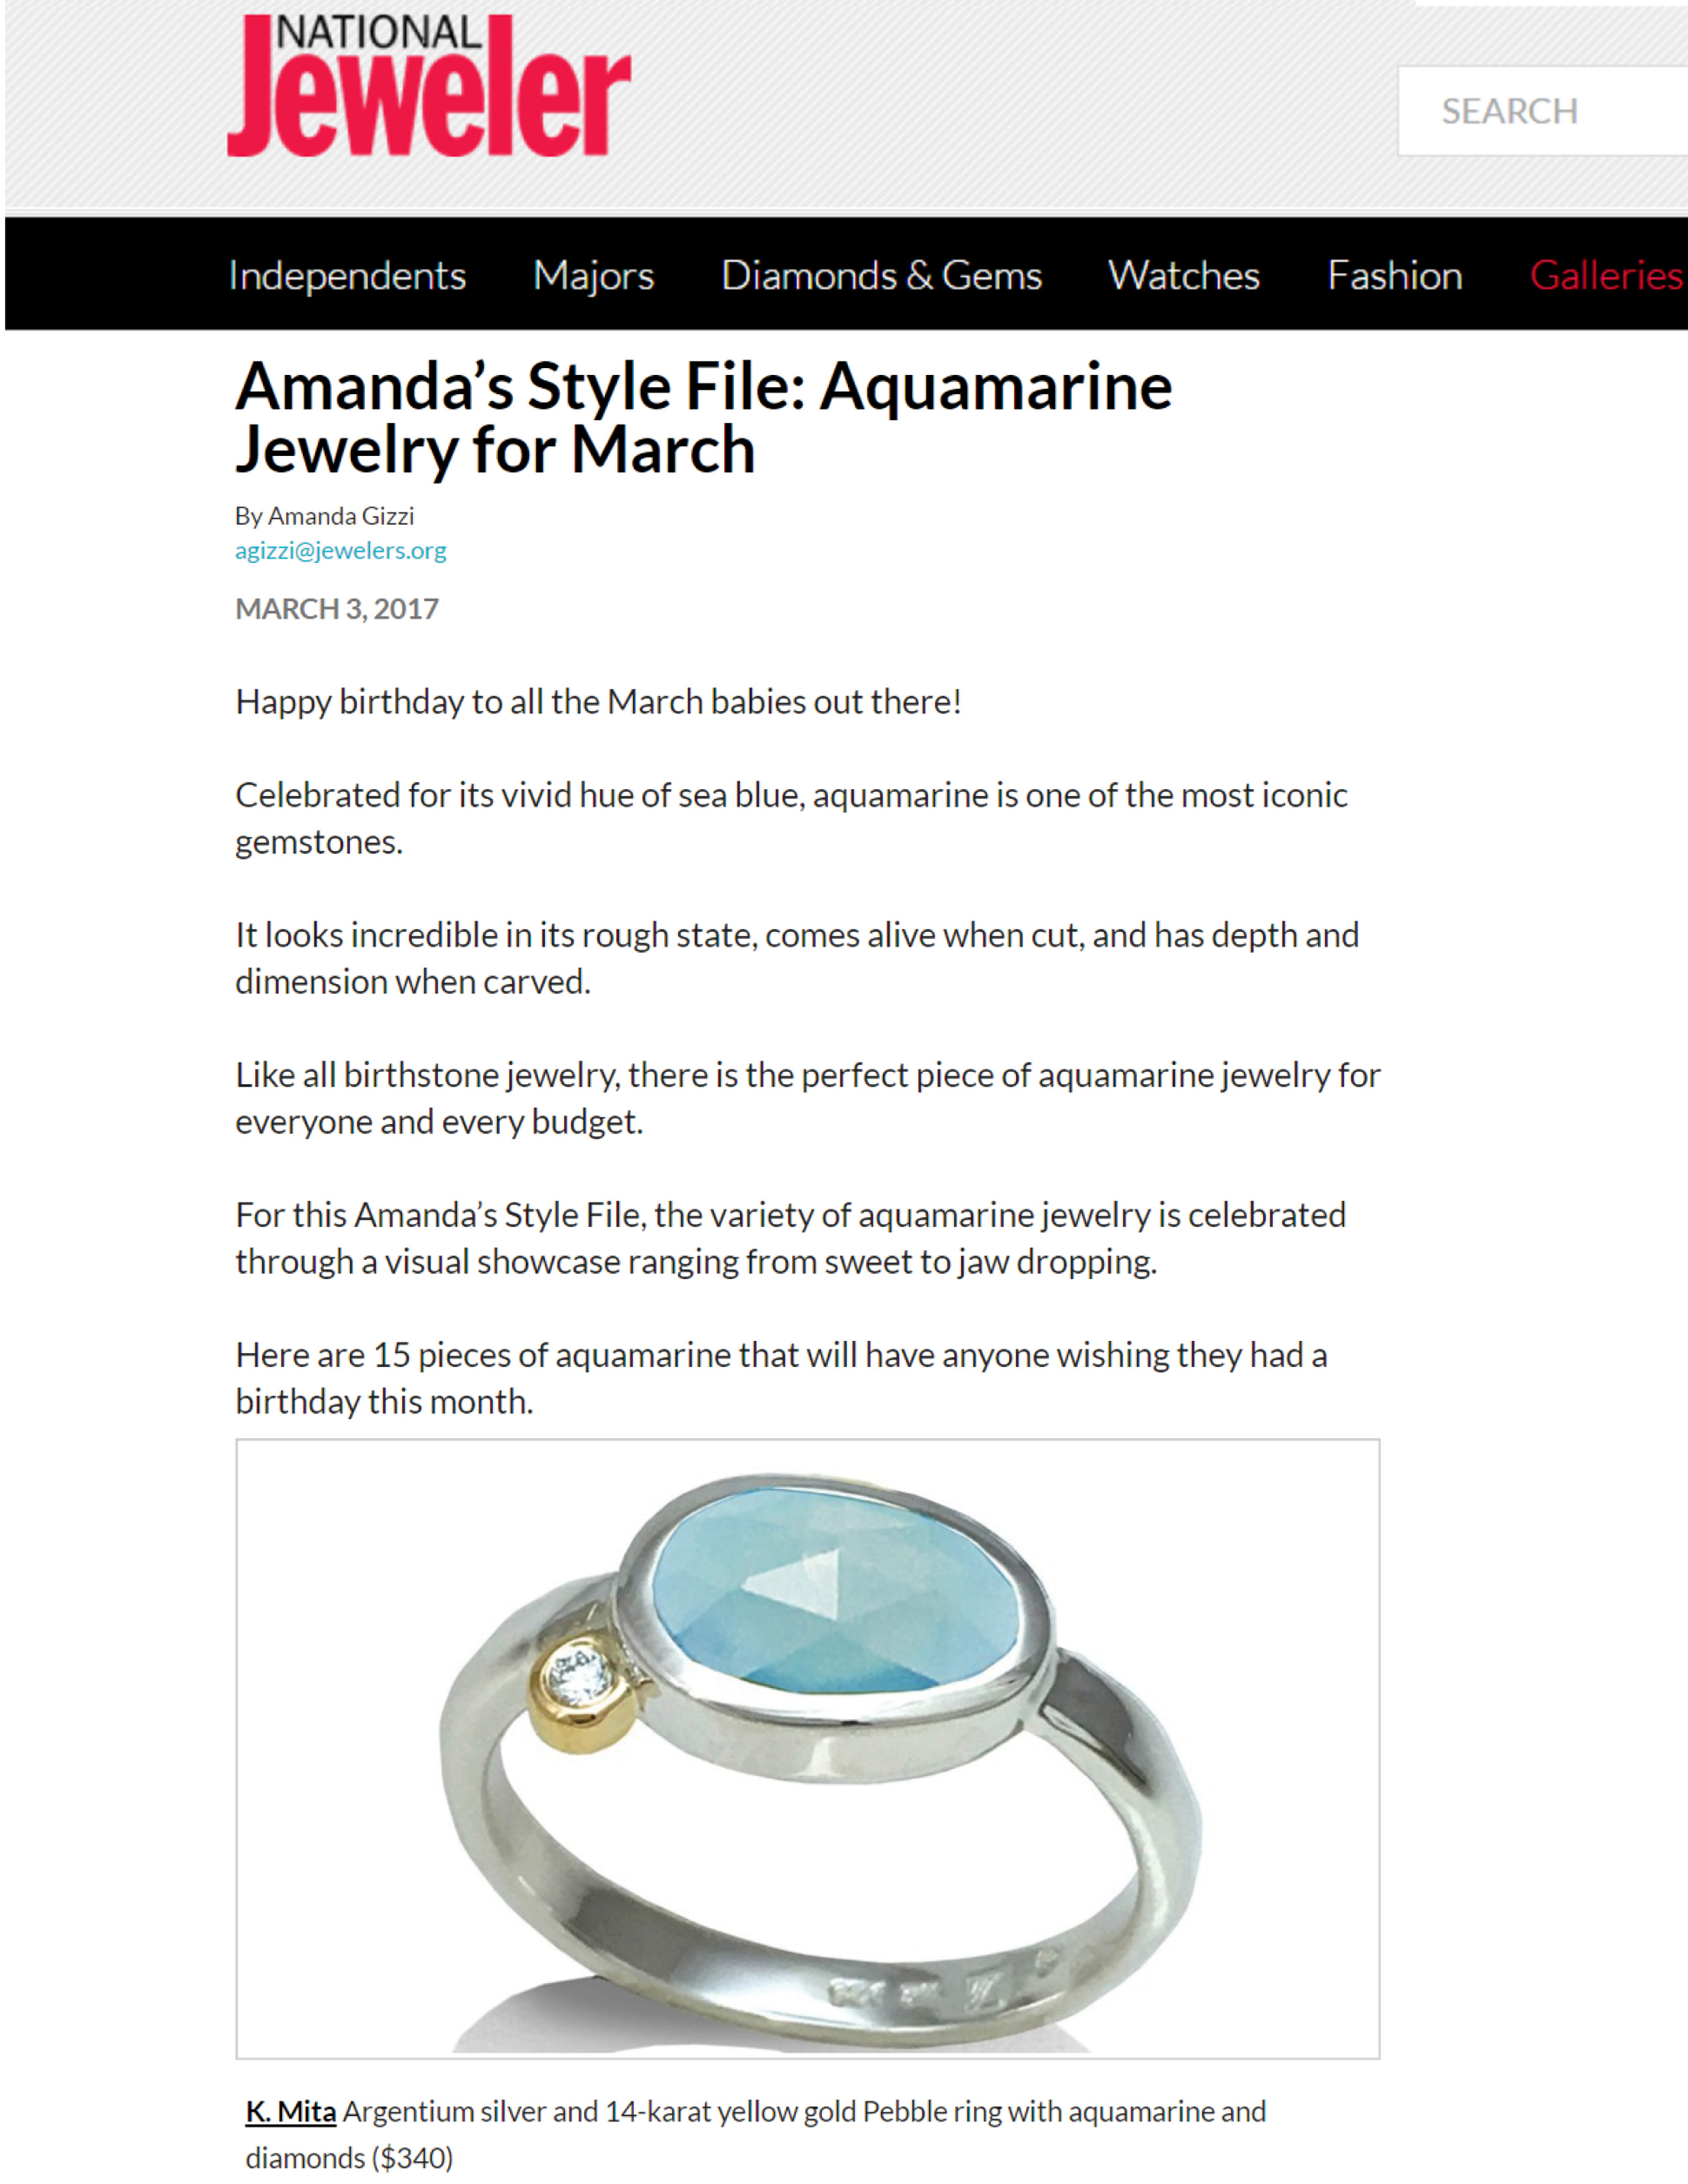 Aquamarine Pebble Ring from K.Mita | nationaljeweler.com Mar 2017